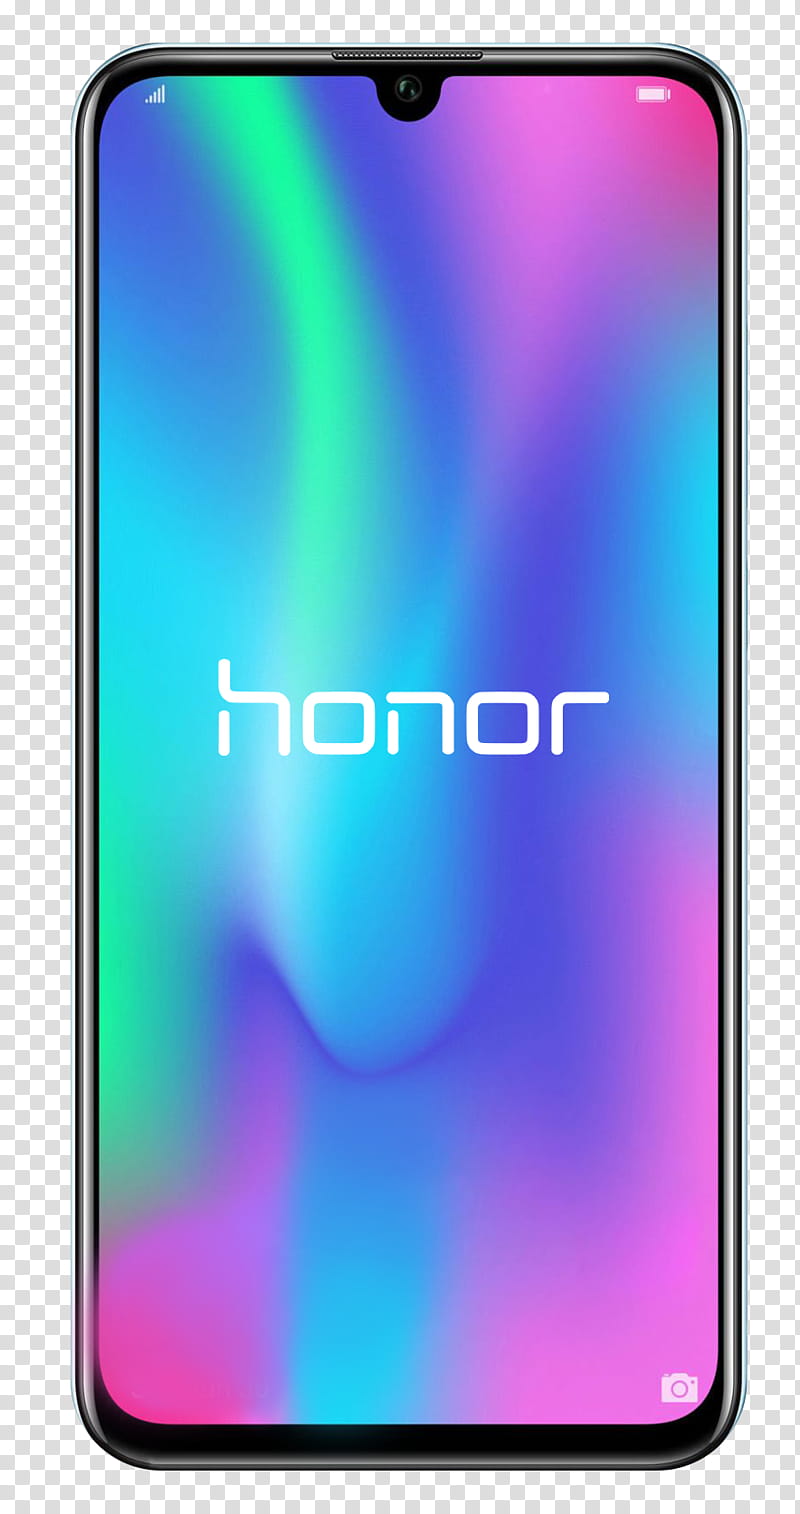 Cartoon Phone, Honor 10 Lite, 64 Gb, Smartphone, Huawei, Honor 9n, 4gb Ram, Black transparent background PNG clipart